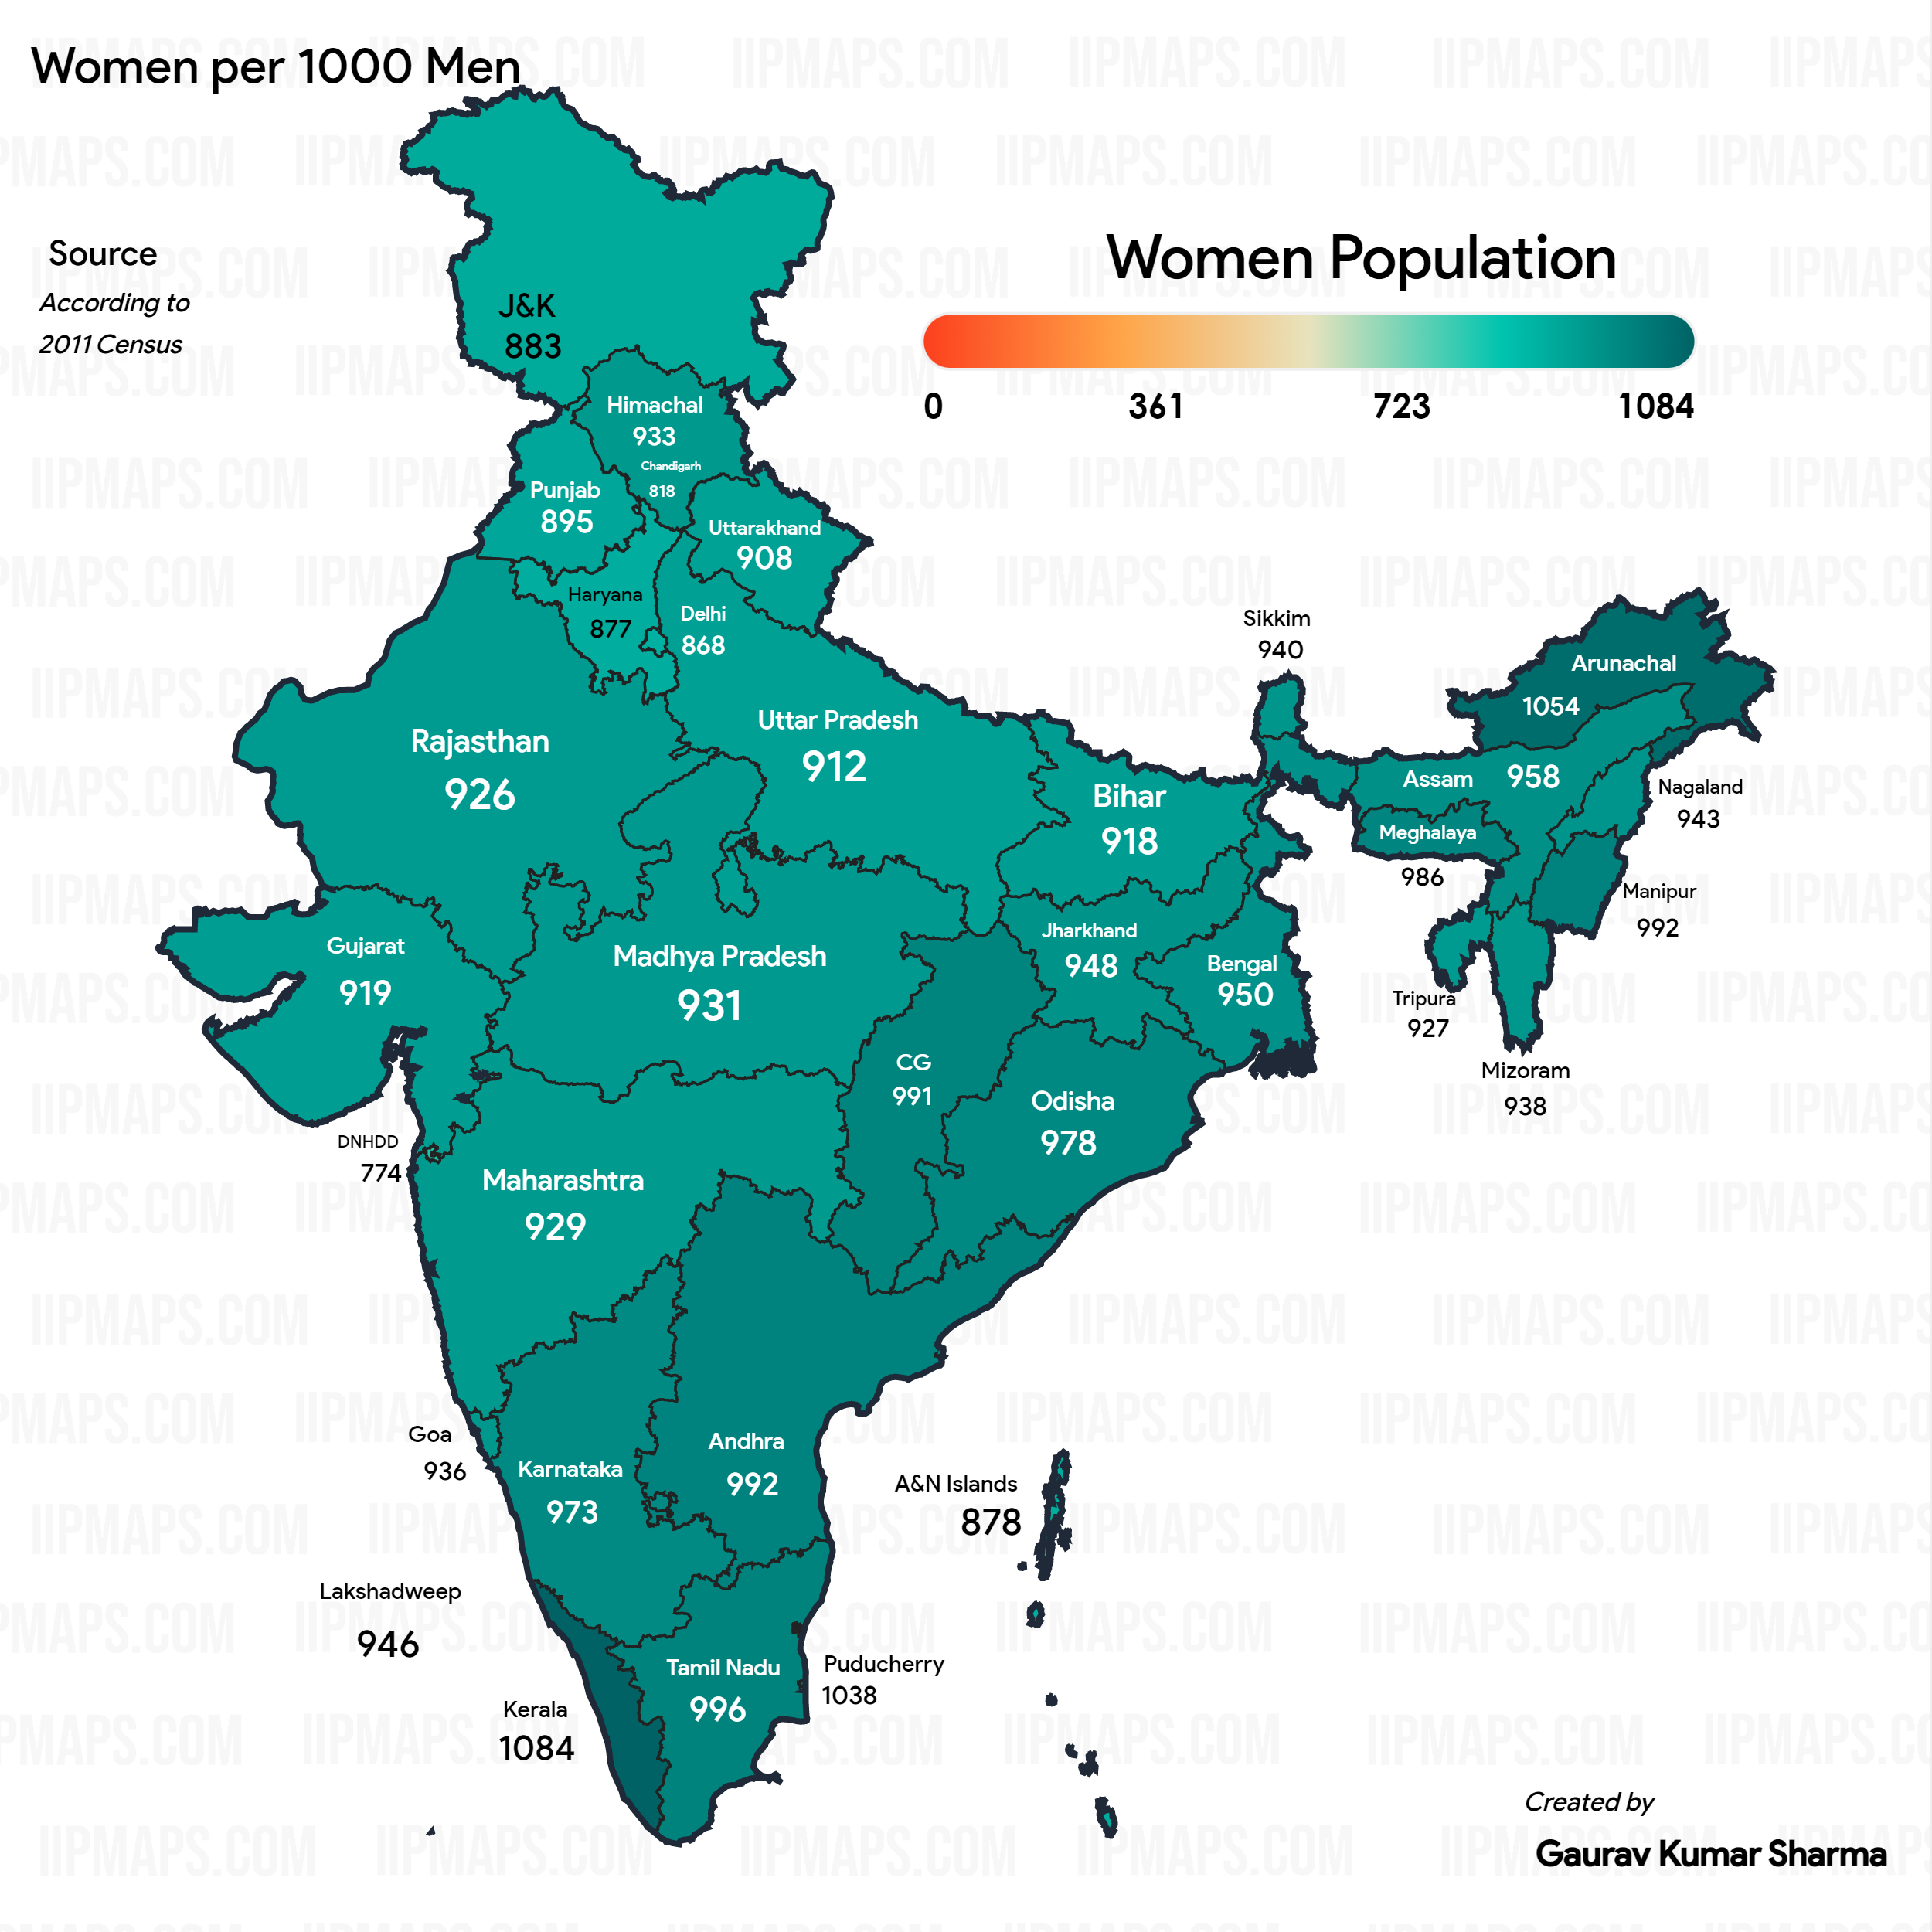 Women Population